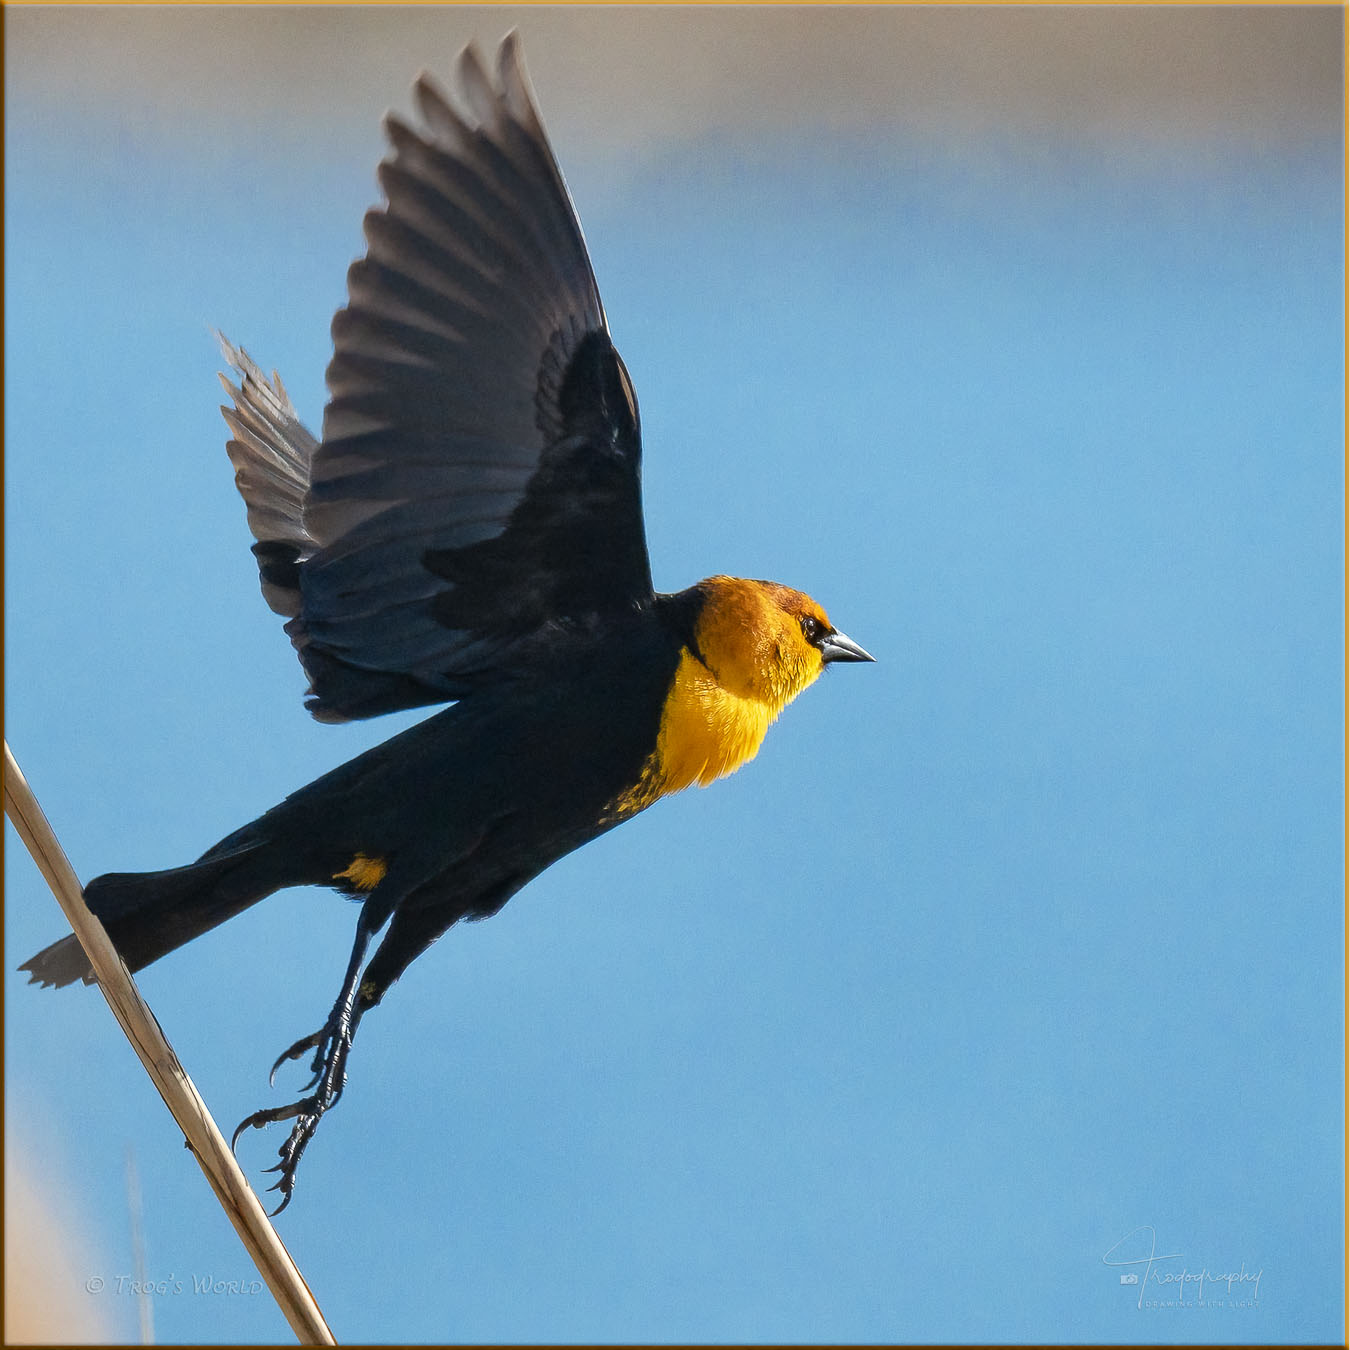 Yellow-headed Blackbird taking flight